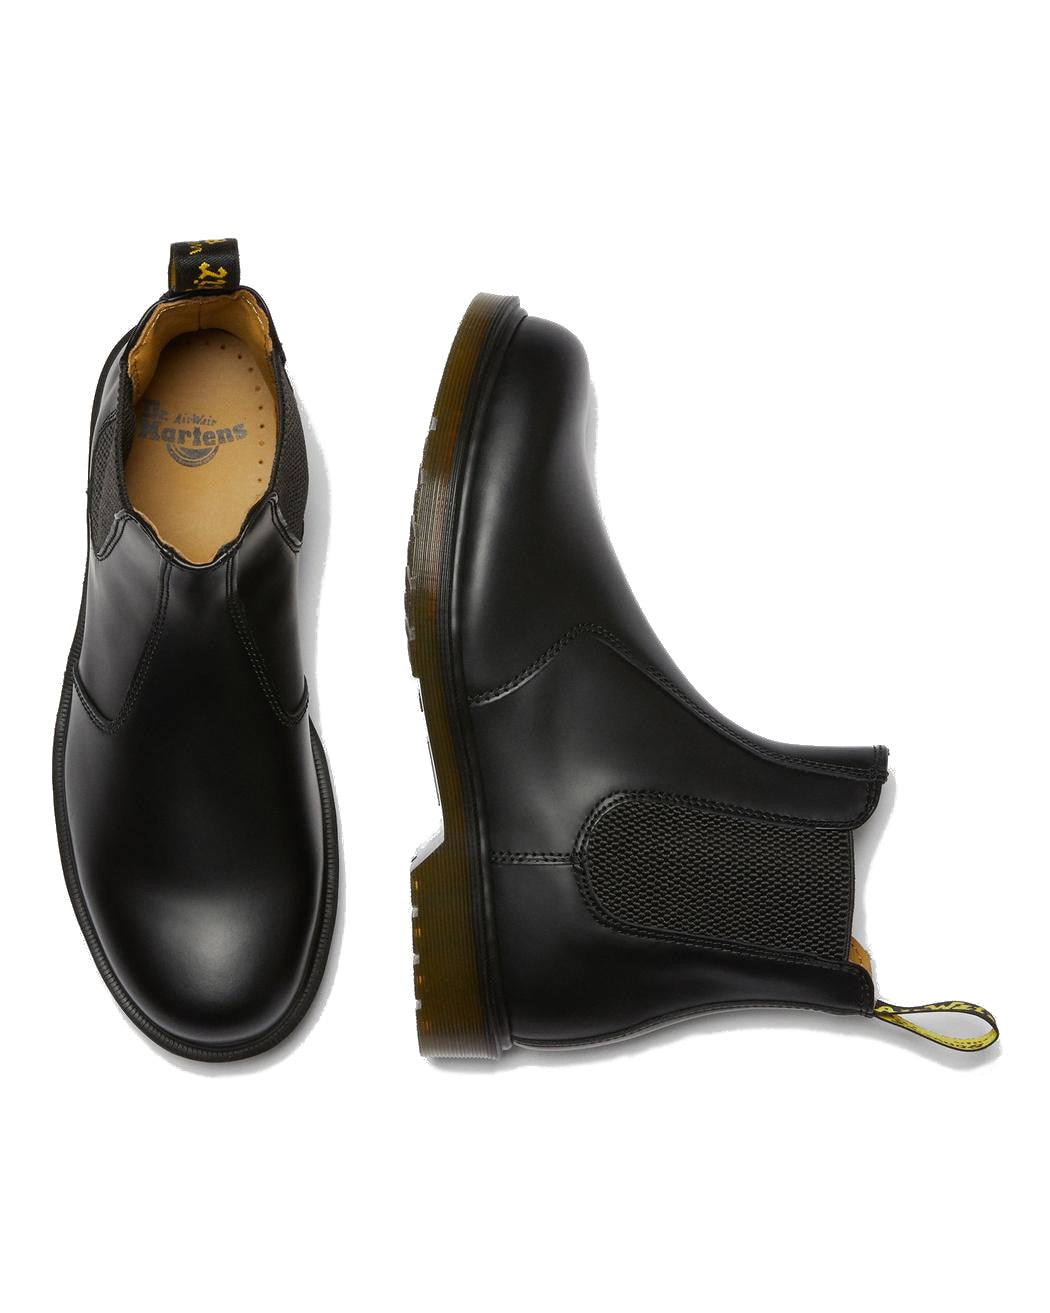 Martens 2976 Leather Chelsea Boot - Black – Alamo Shoes